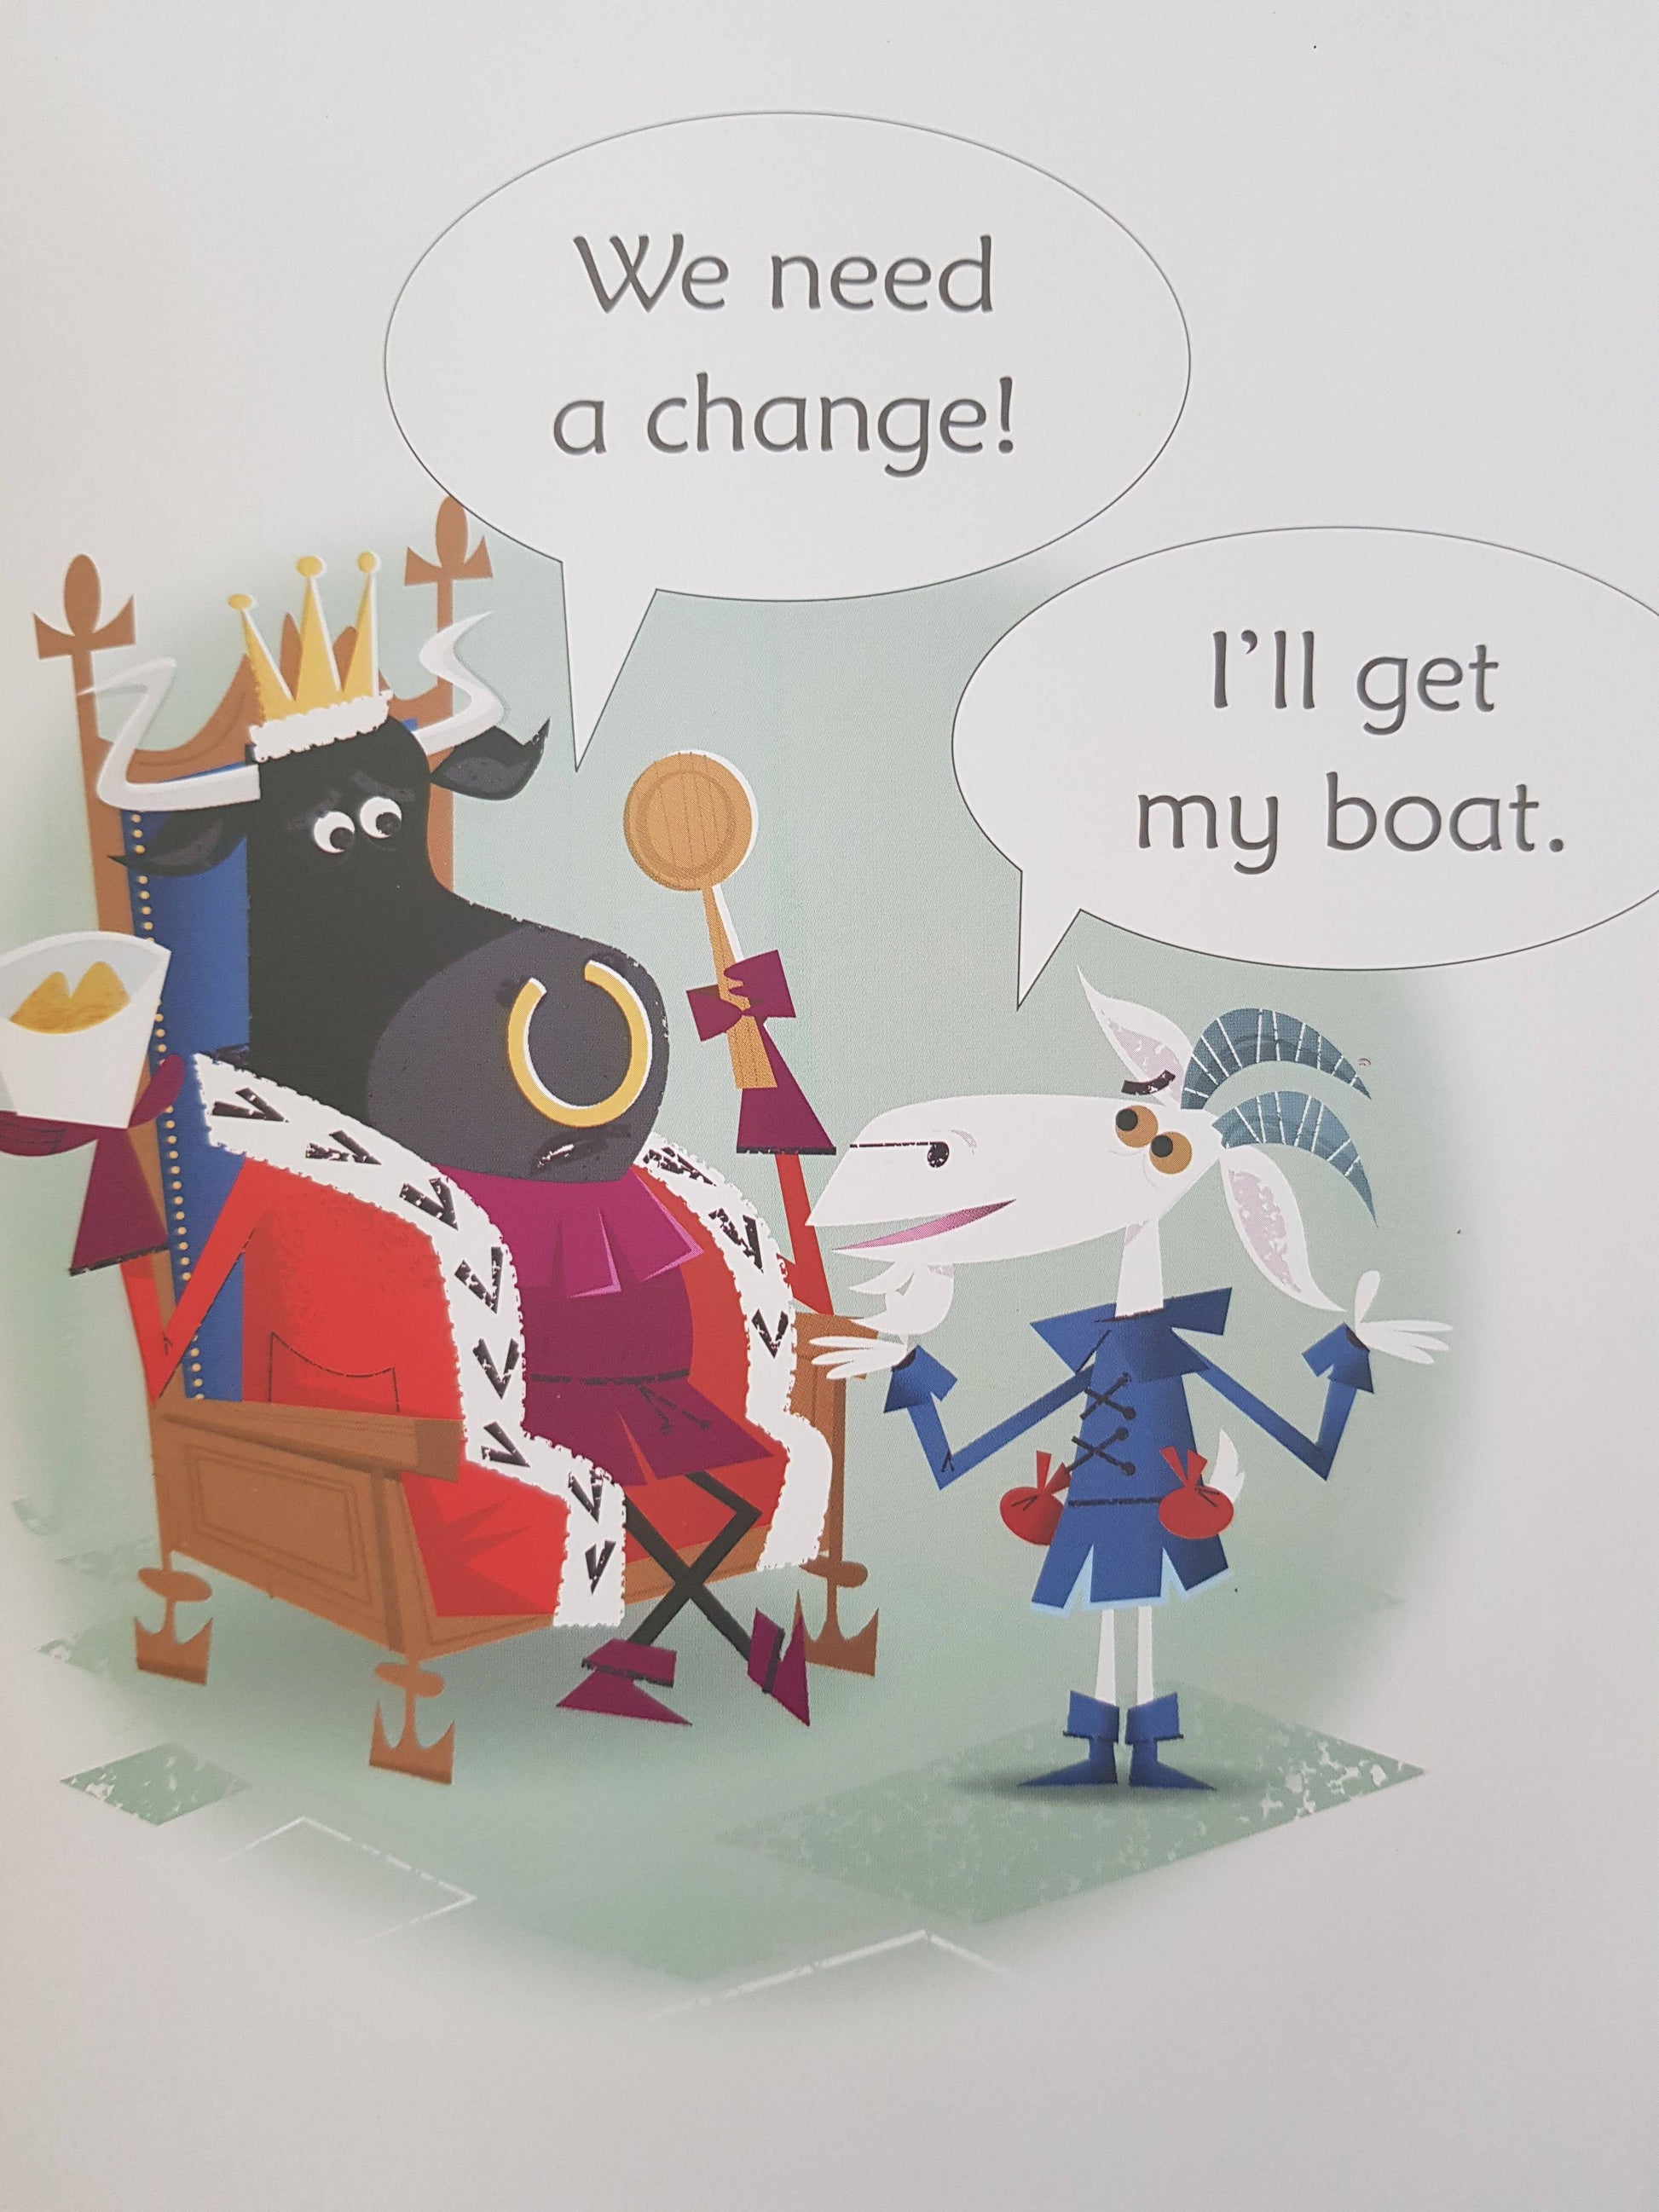 Goat in a Boat New Usborne  (6323384713401)